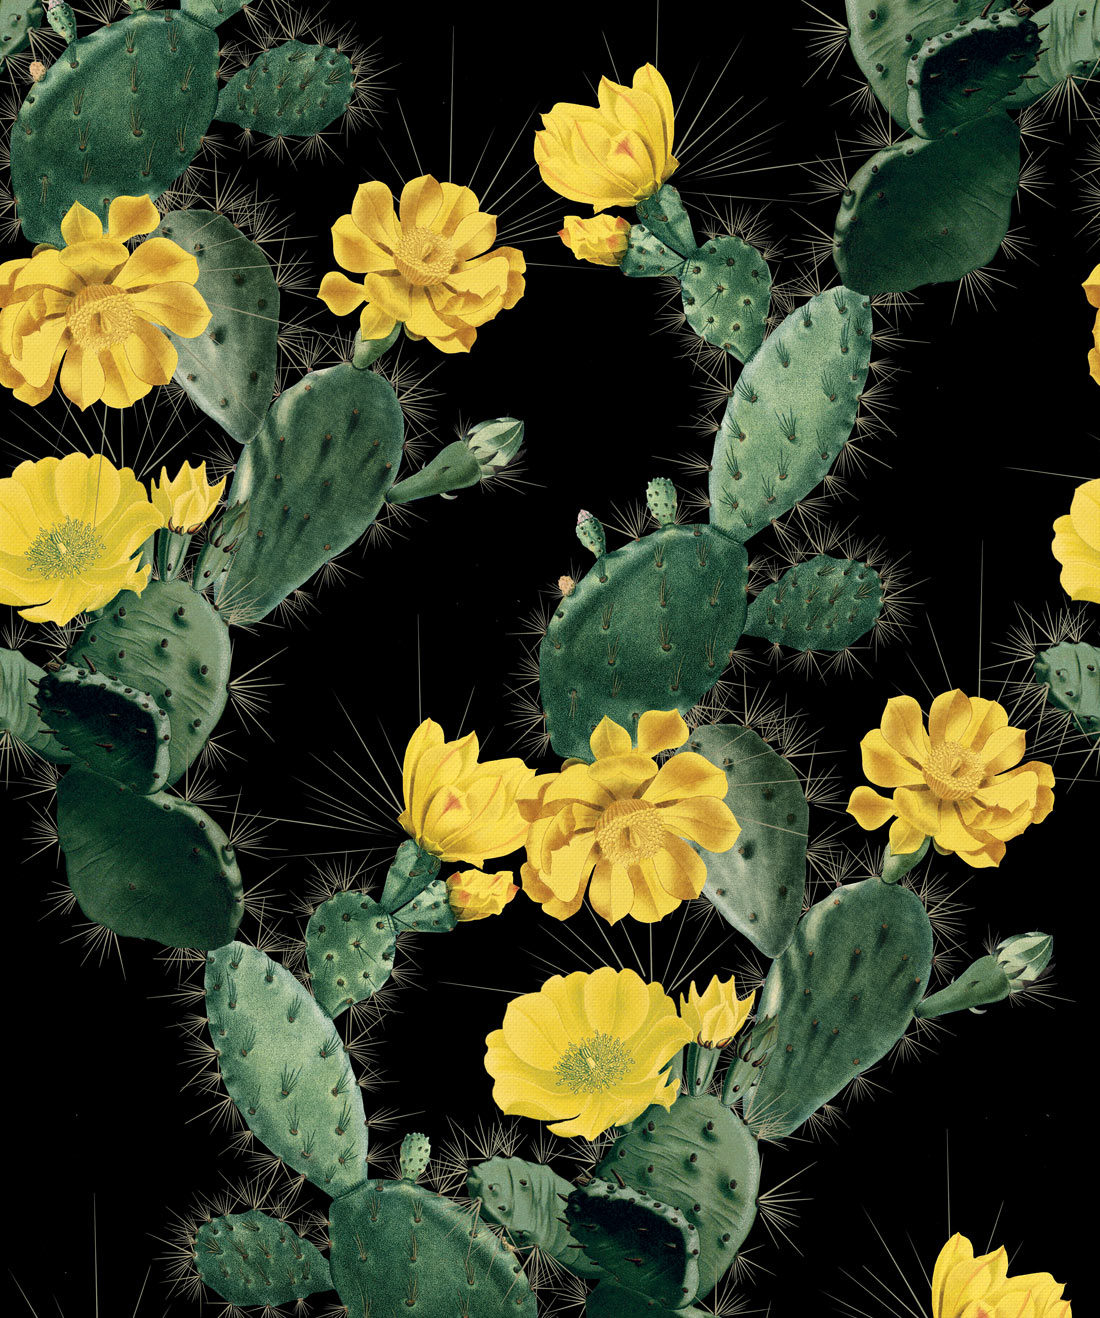 Cactus At Night - HD Wallpaper 